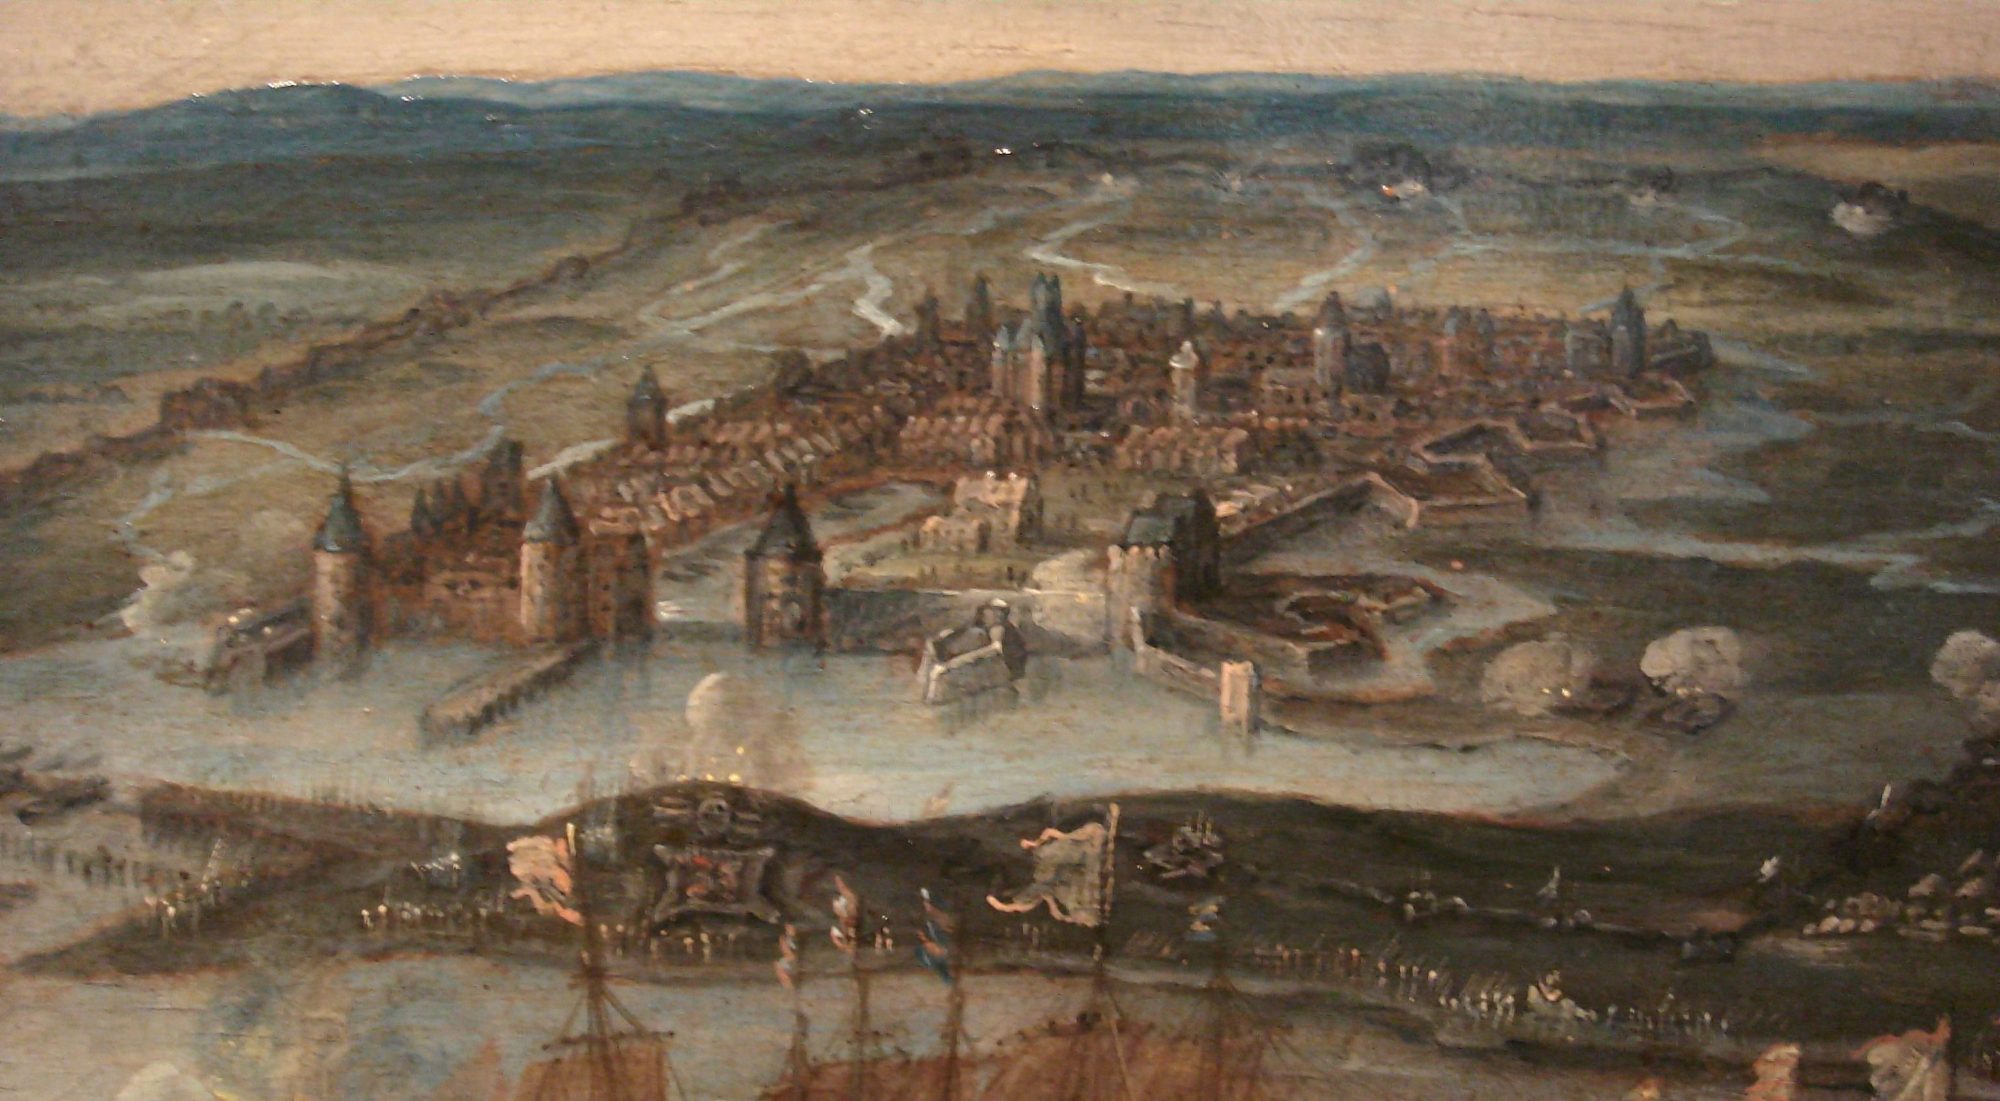 La Rochelle during the 1628 siege, Orbigny-Bernon Museum